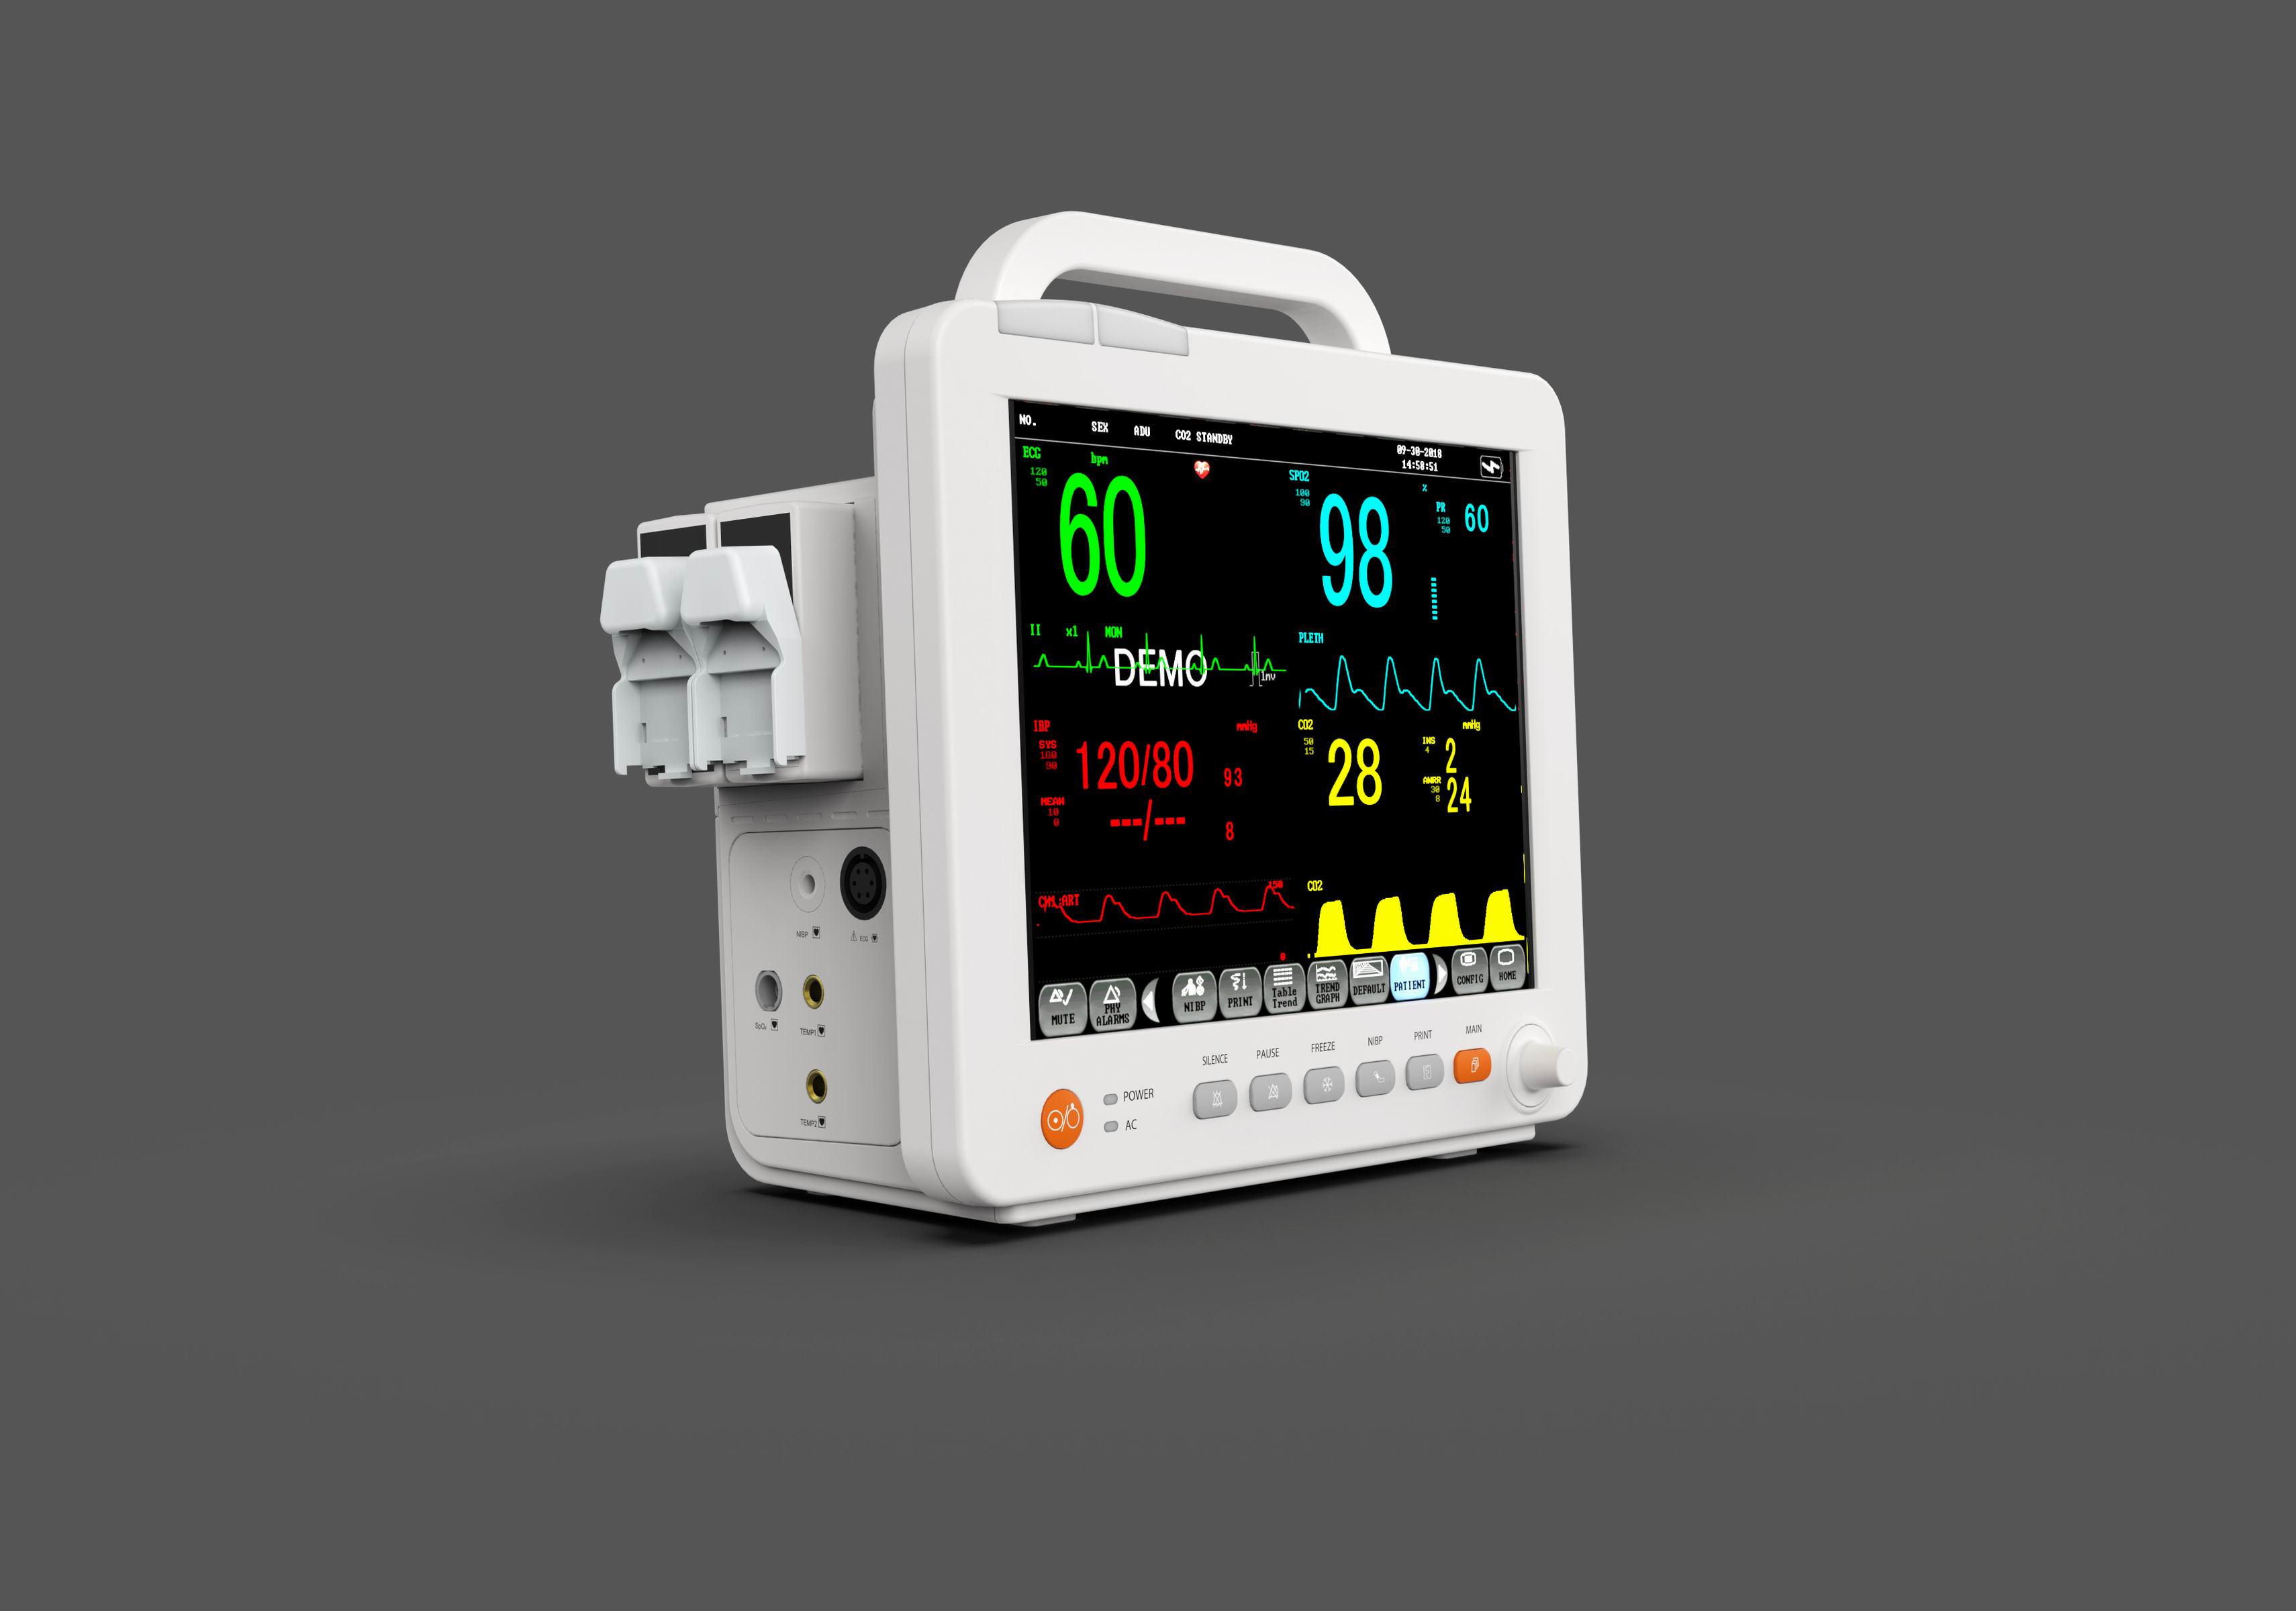 MS-8000M Modular Multi-Parameter Patient Monitor